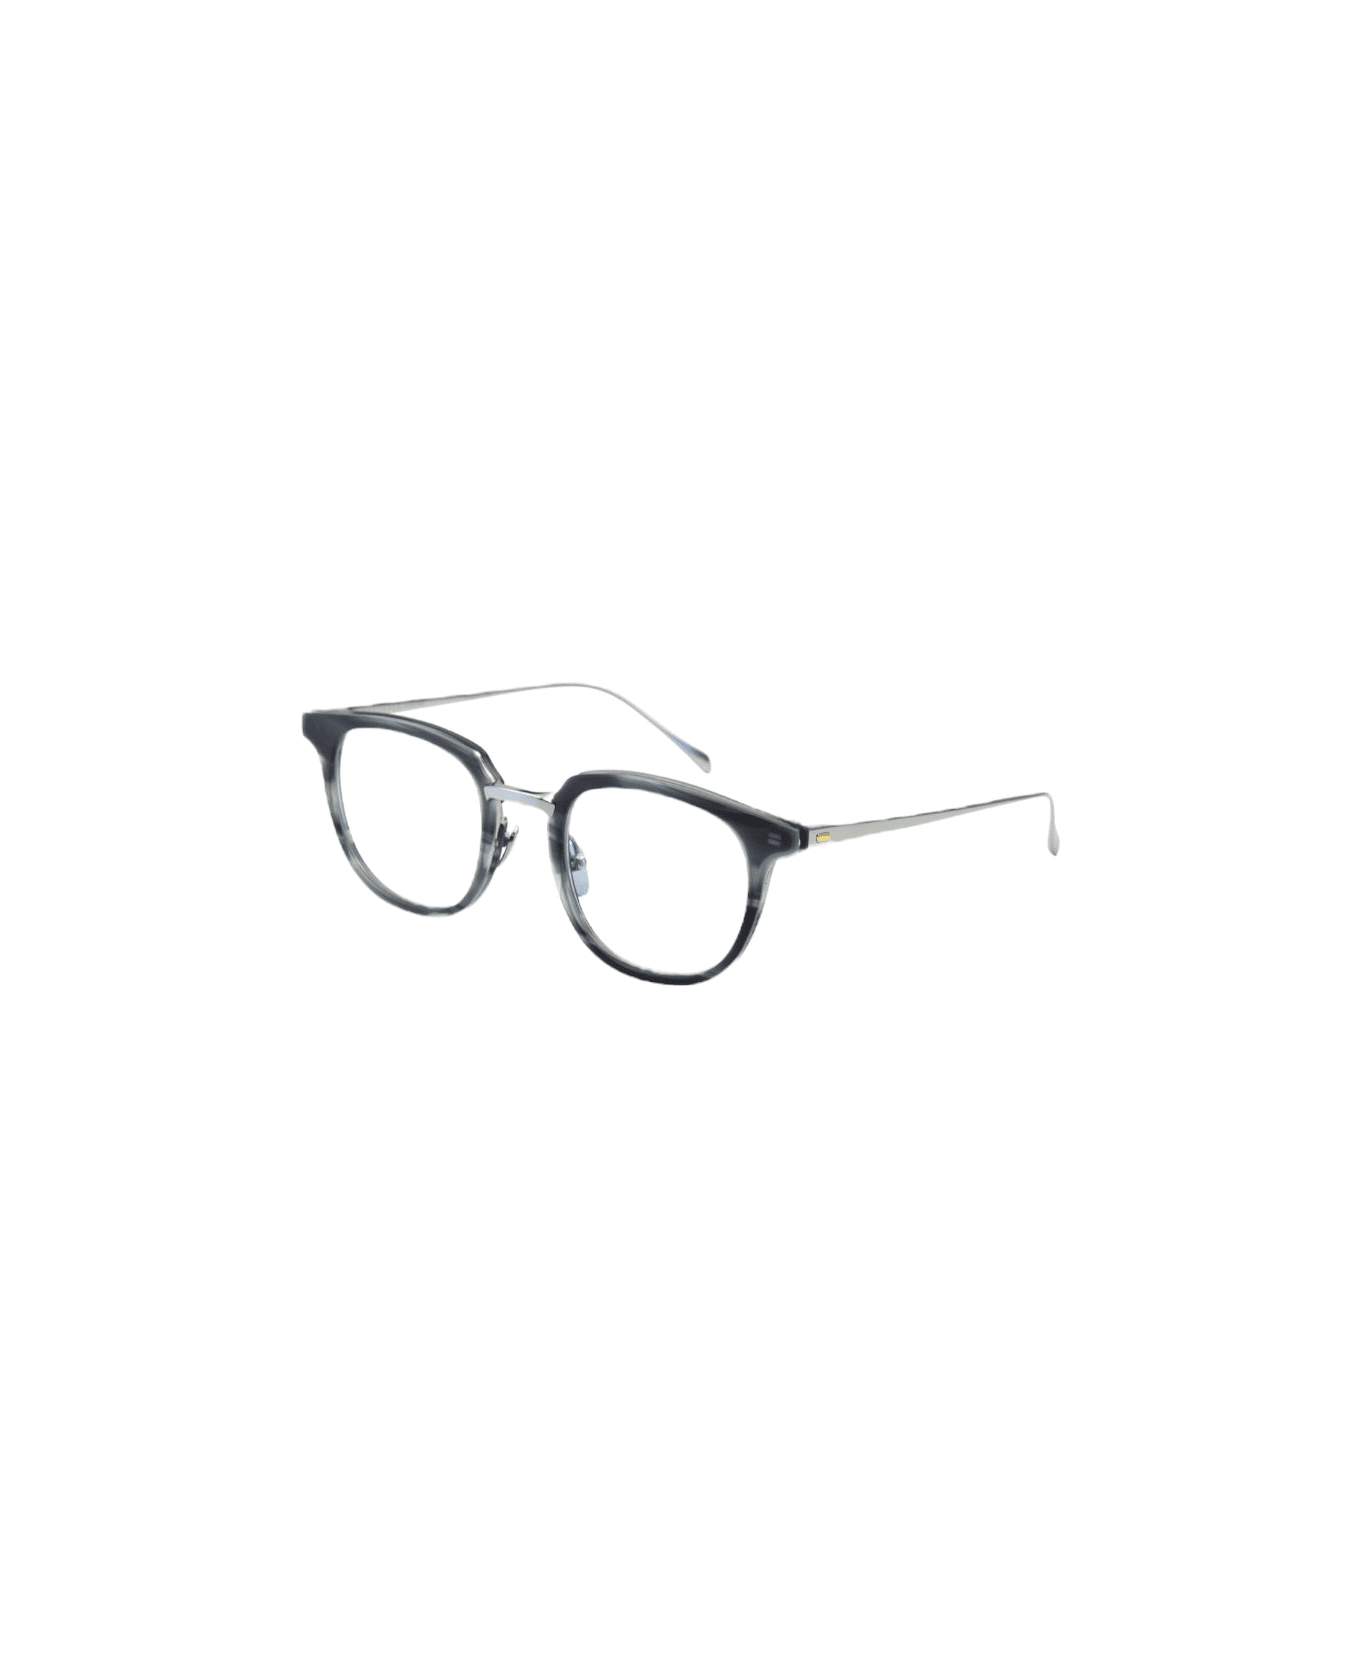 Masunaga Gms-821 - Grey Glasses アイウェア